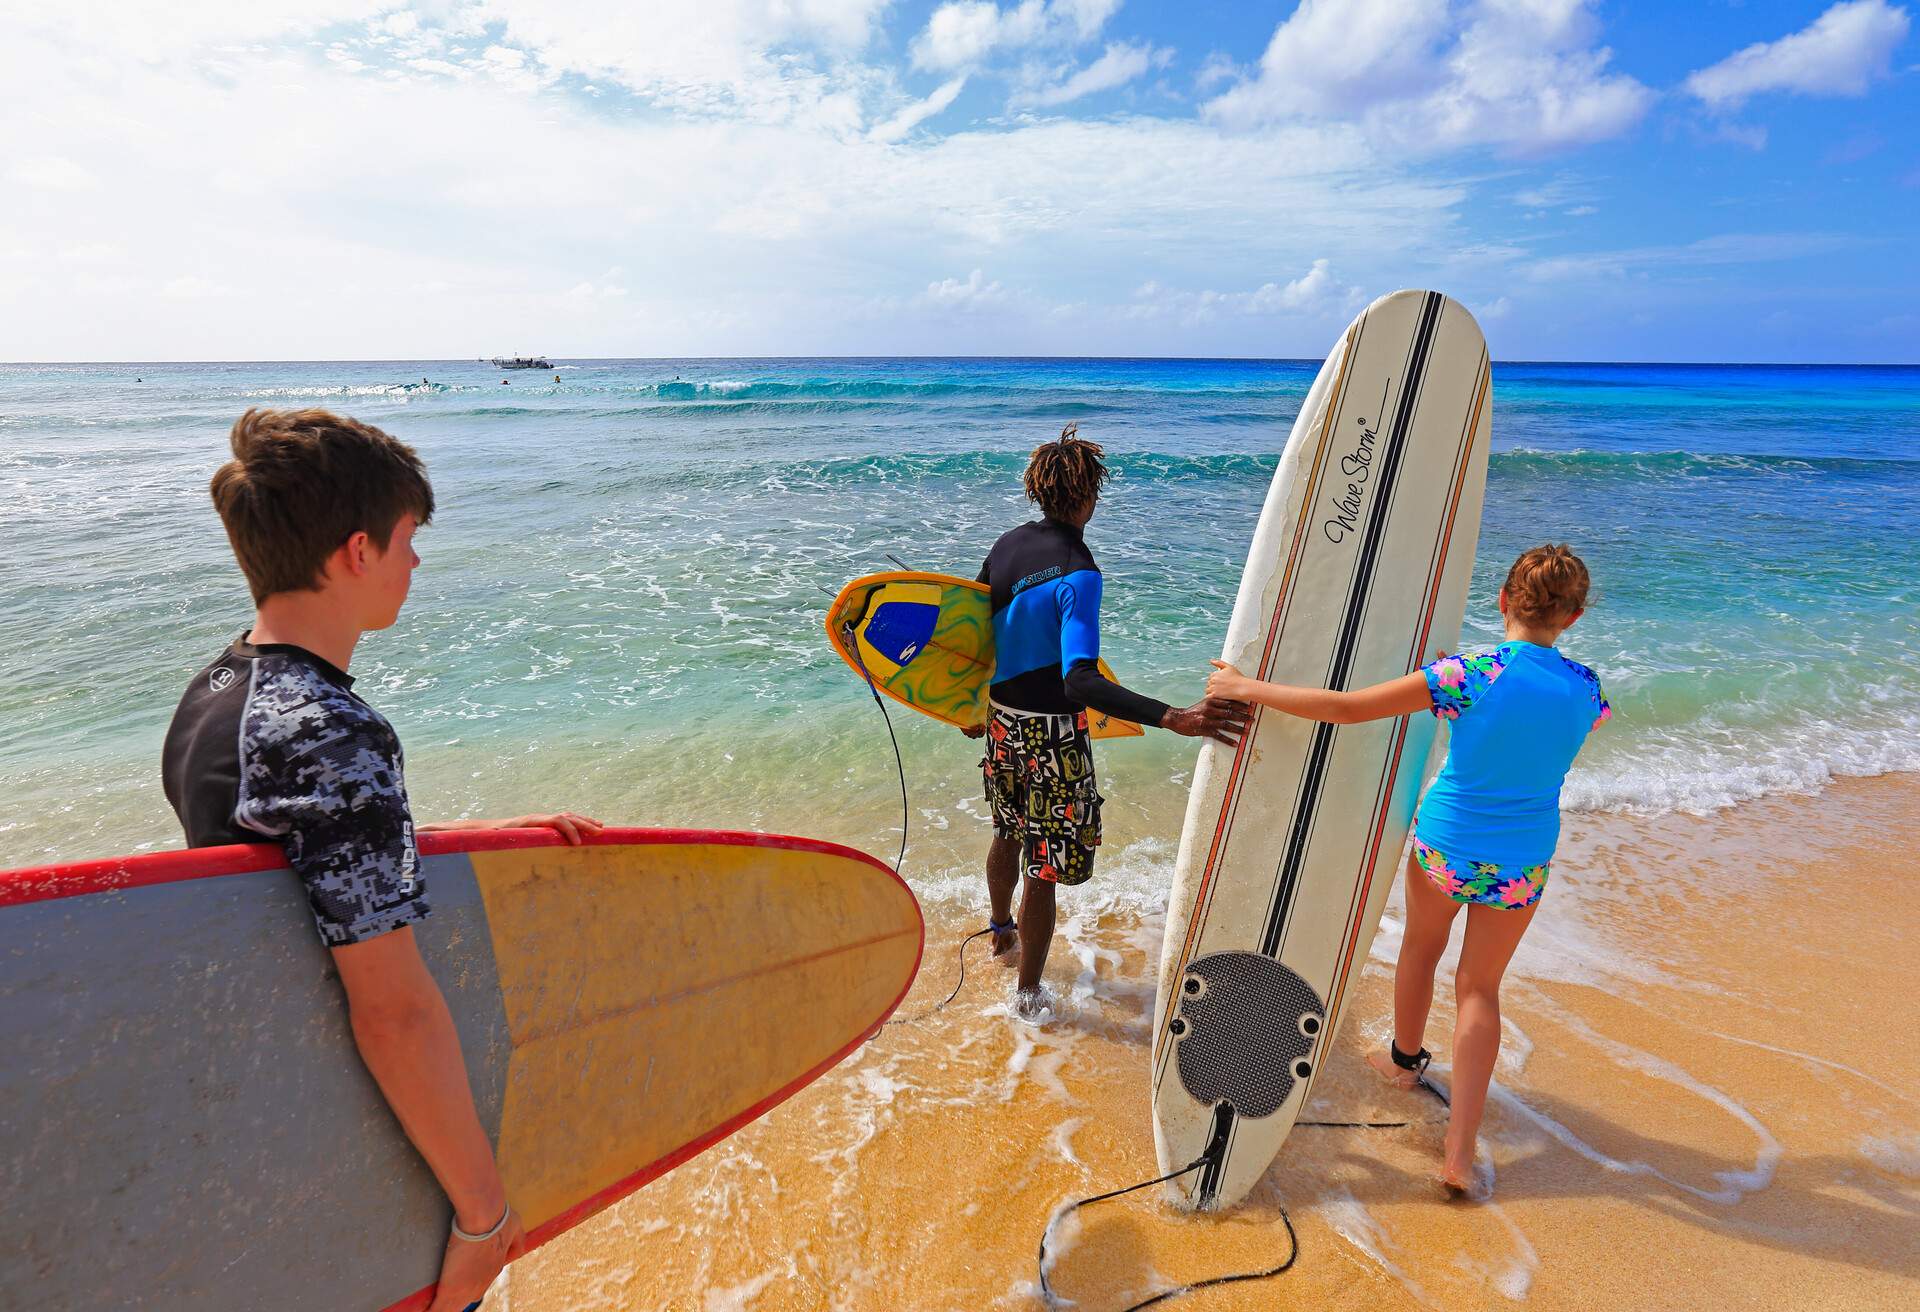 SURF-SCHOOL-BEACH-PEOPLE-LEARNING